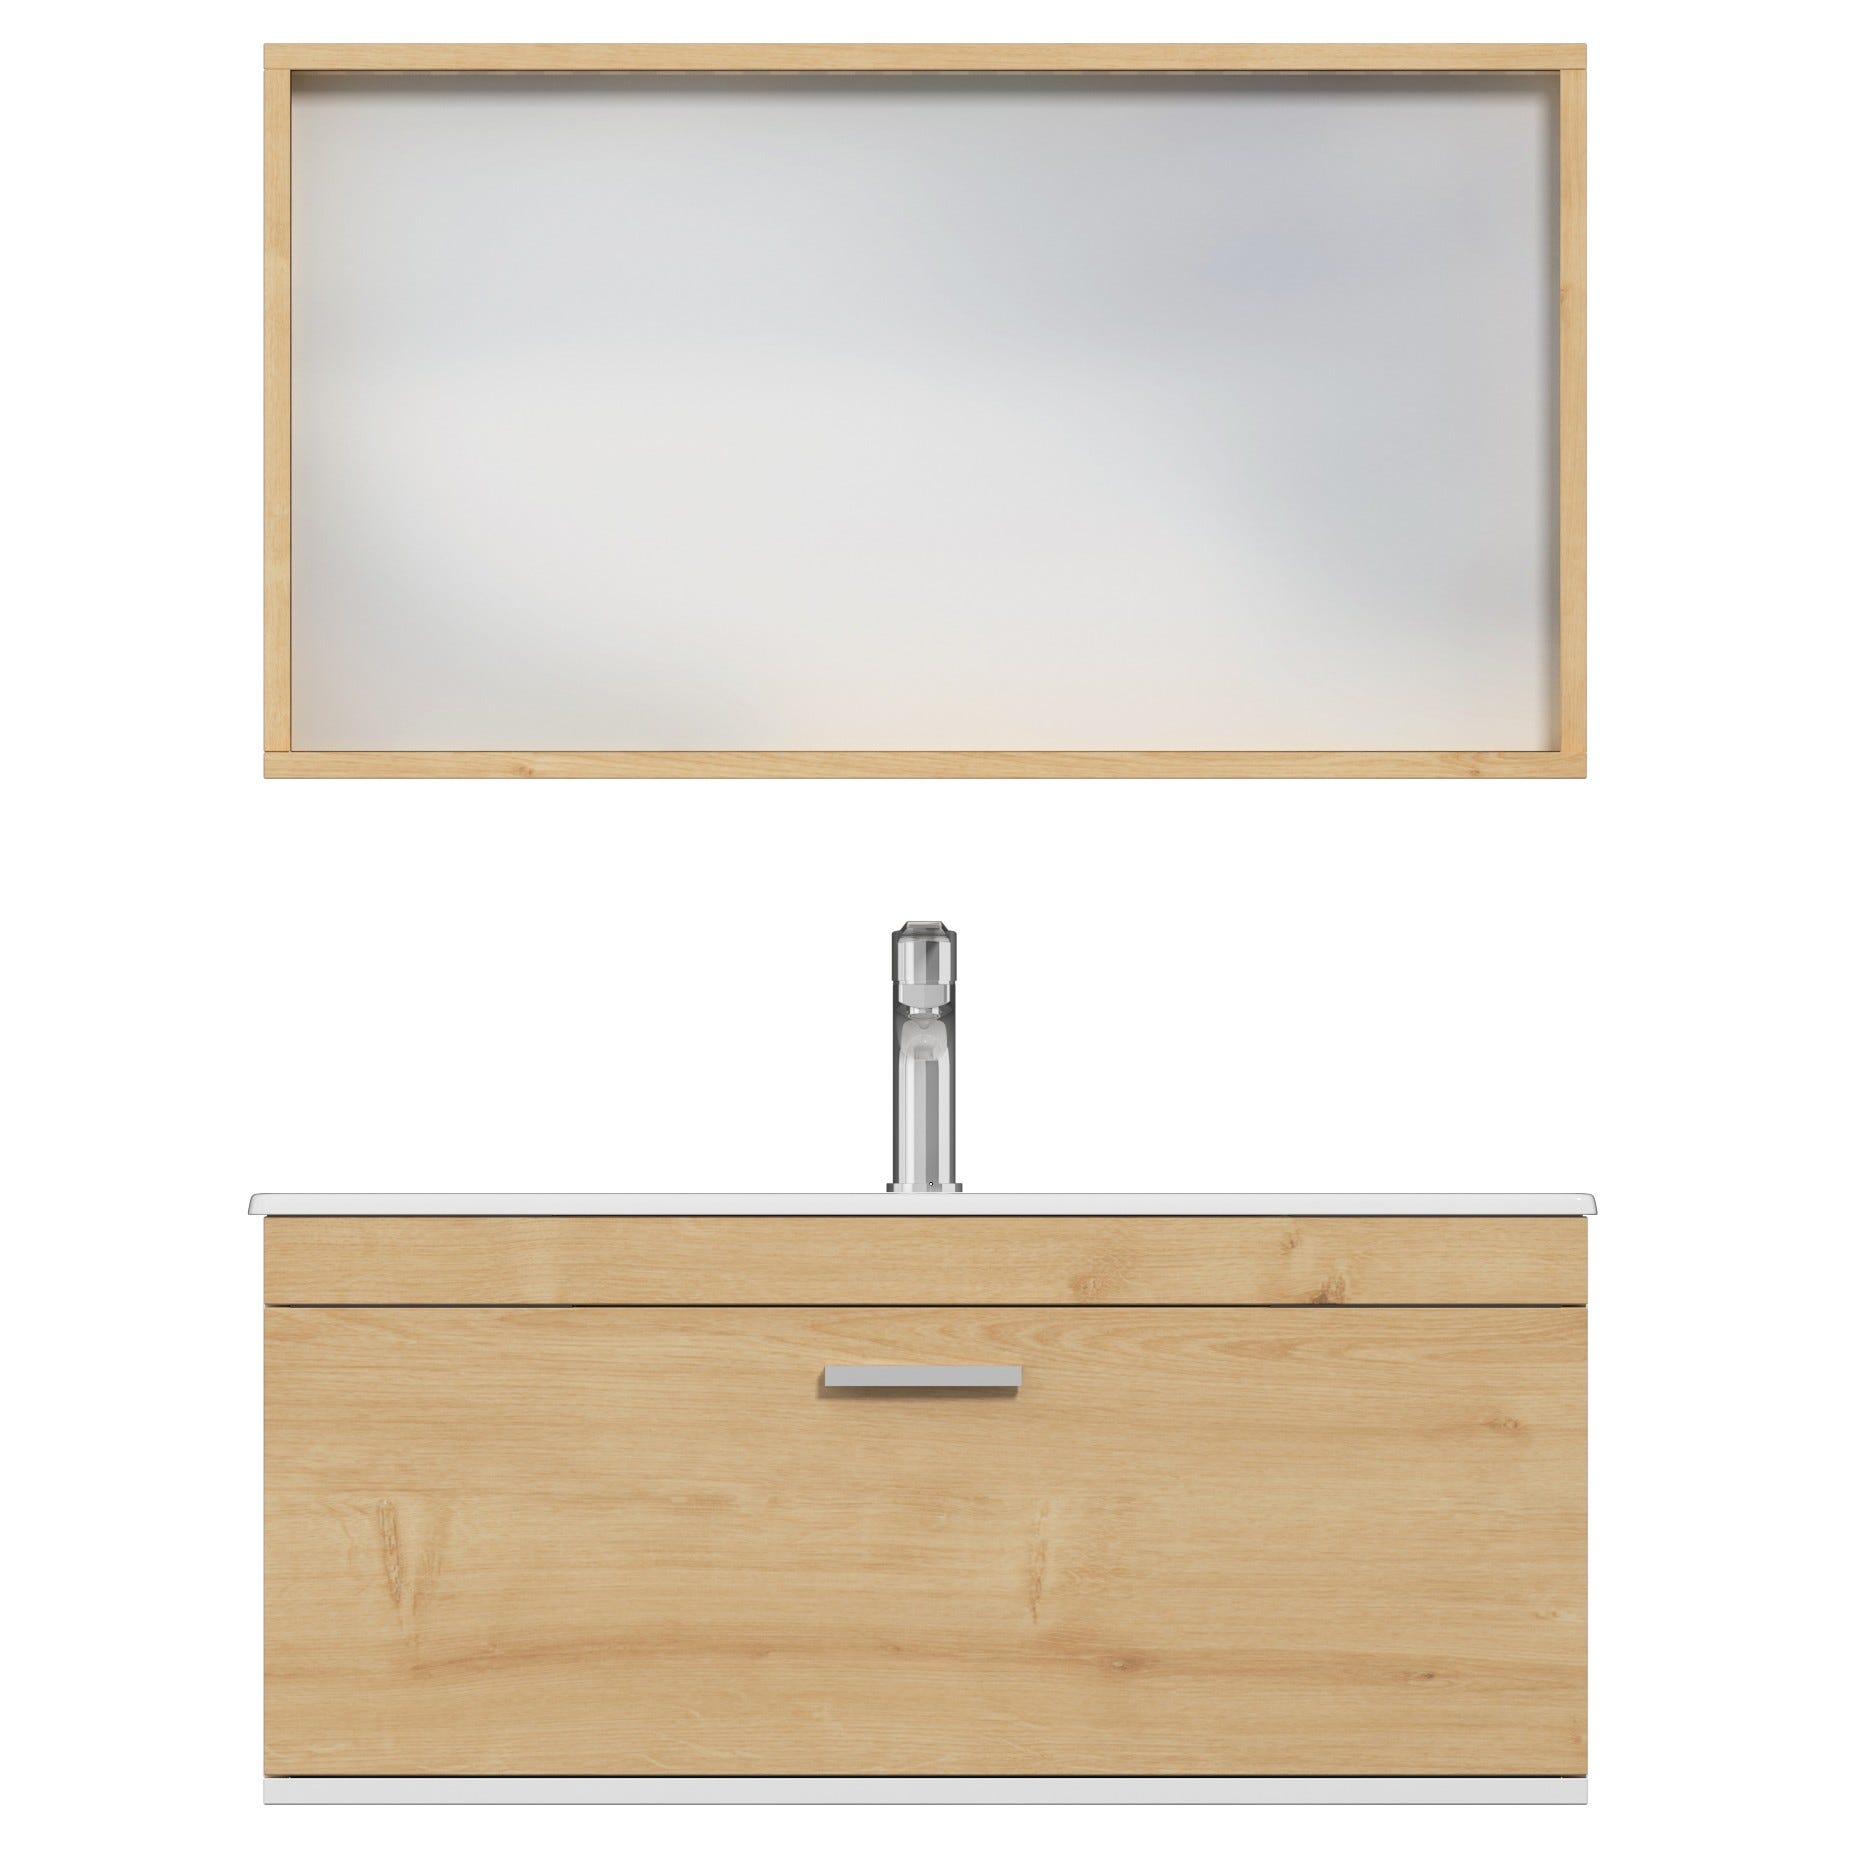 RUBITE Meuble salle de bain simple vasque 1 tiroir chêne clair largeur 90 cm + miroir cadre 4